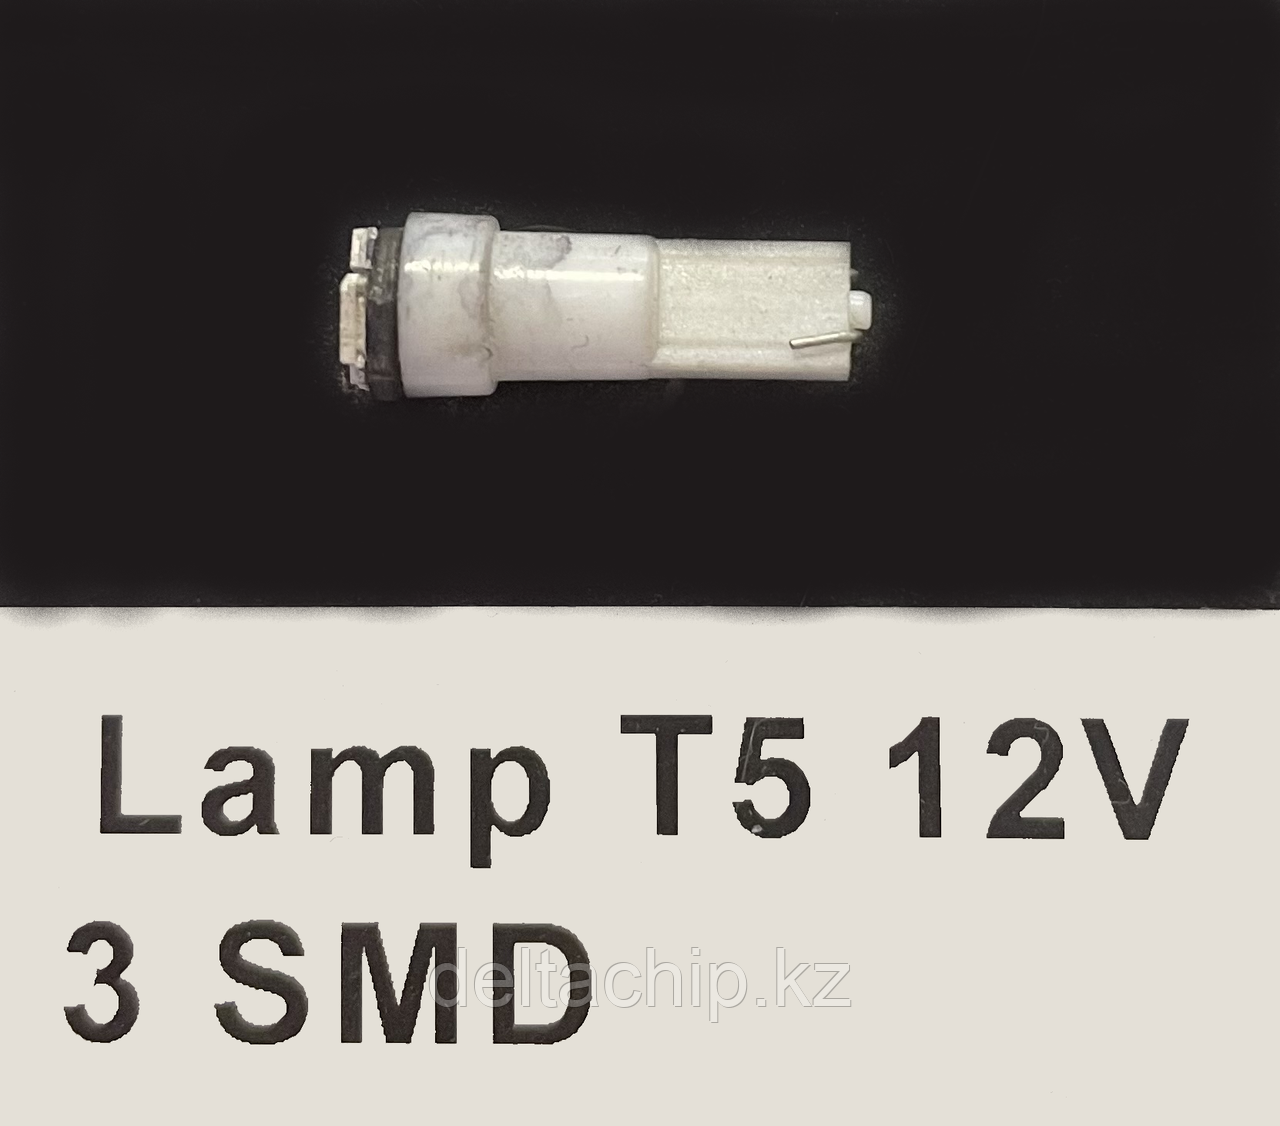 Lamp T5-12V ИМПОРТ  Авто лампочка 12V T5 1,2W галогеновая